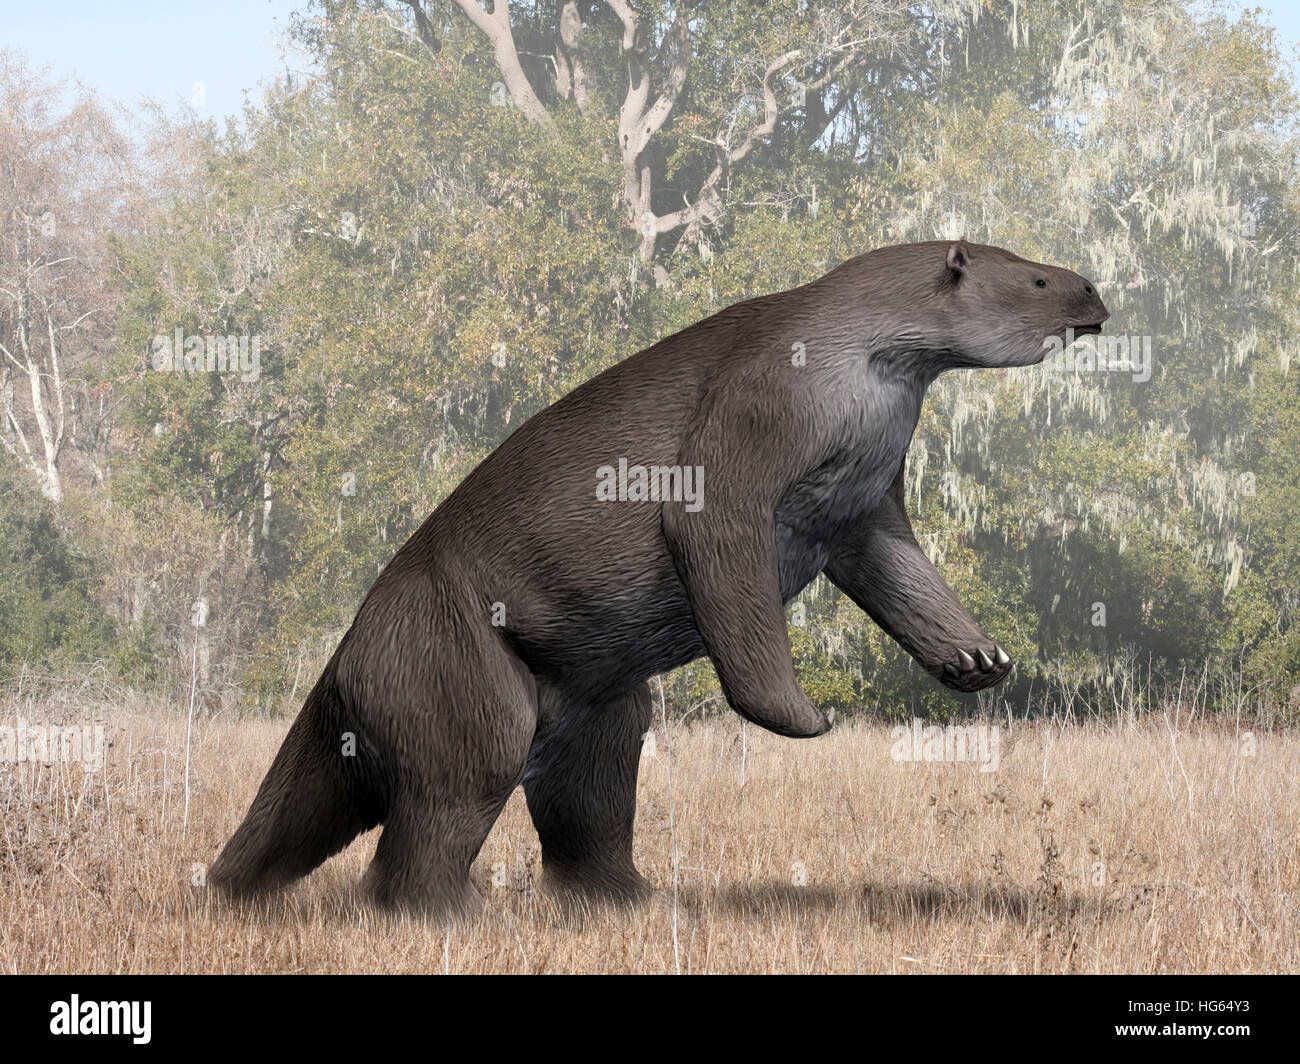 Megatherium animal from the Pleistocene epoch of South America. Stock Photo